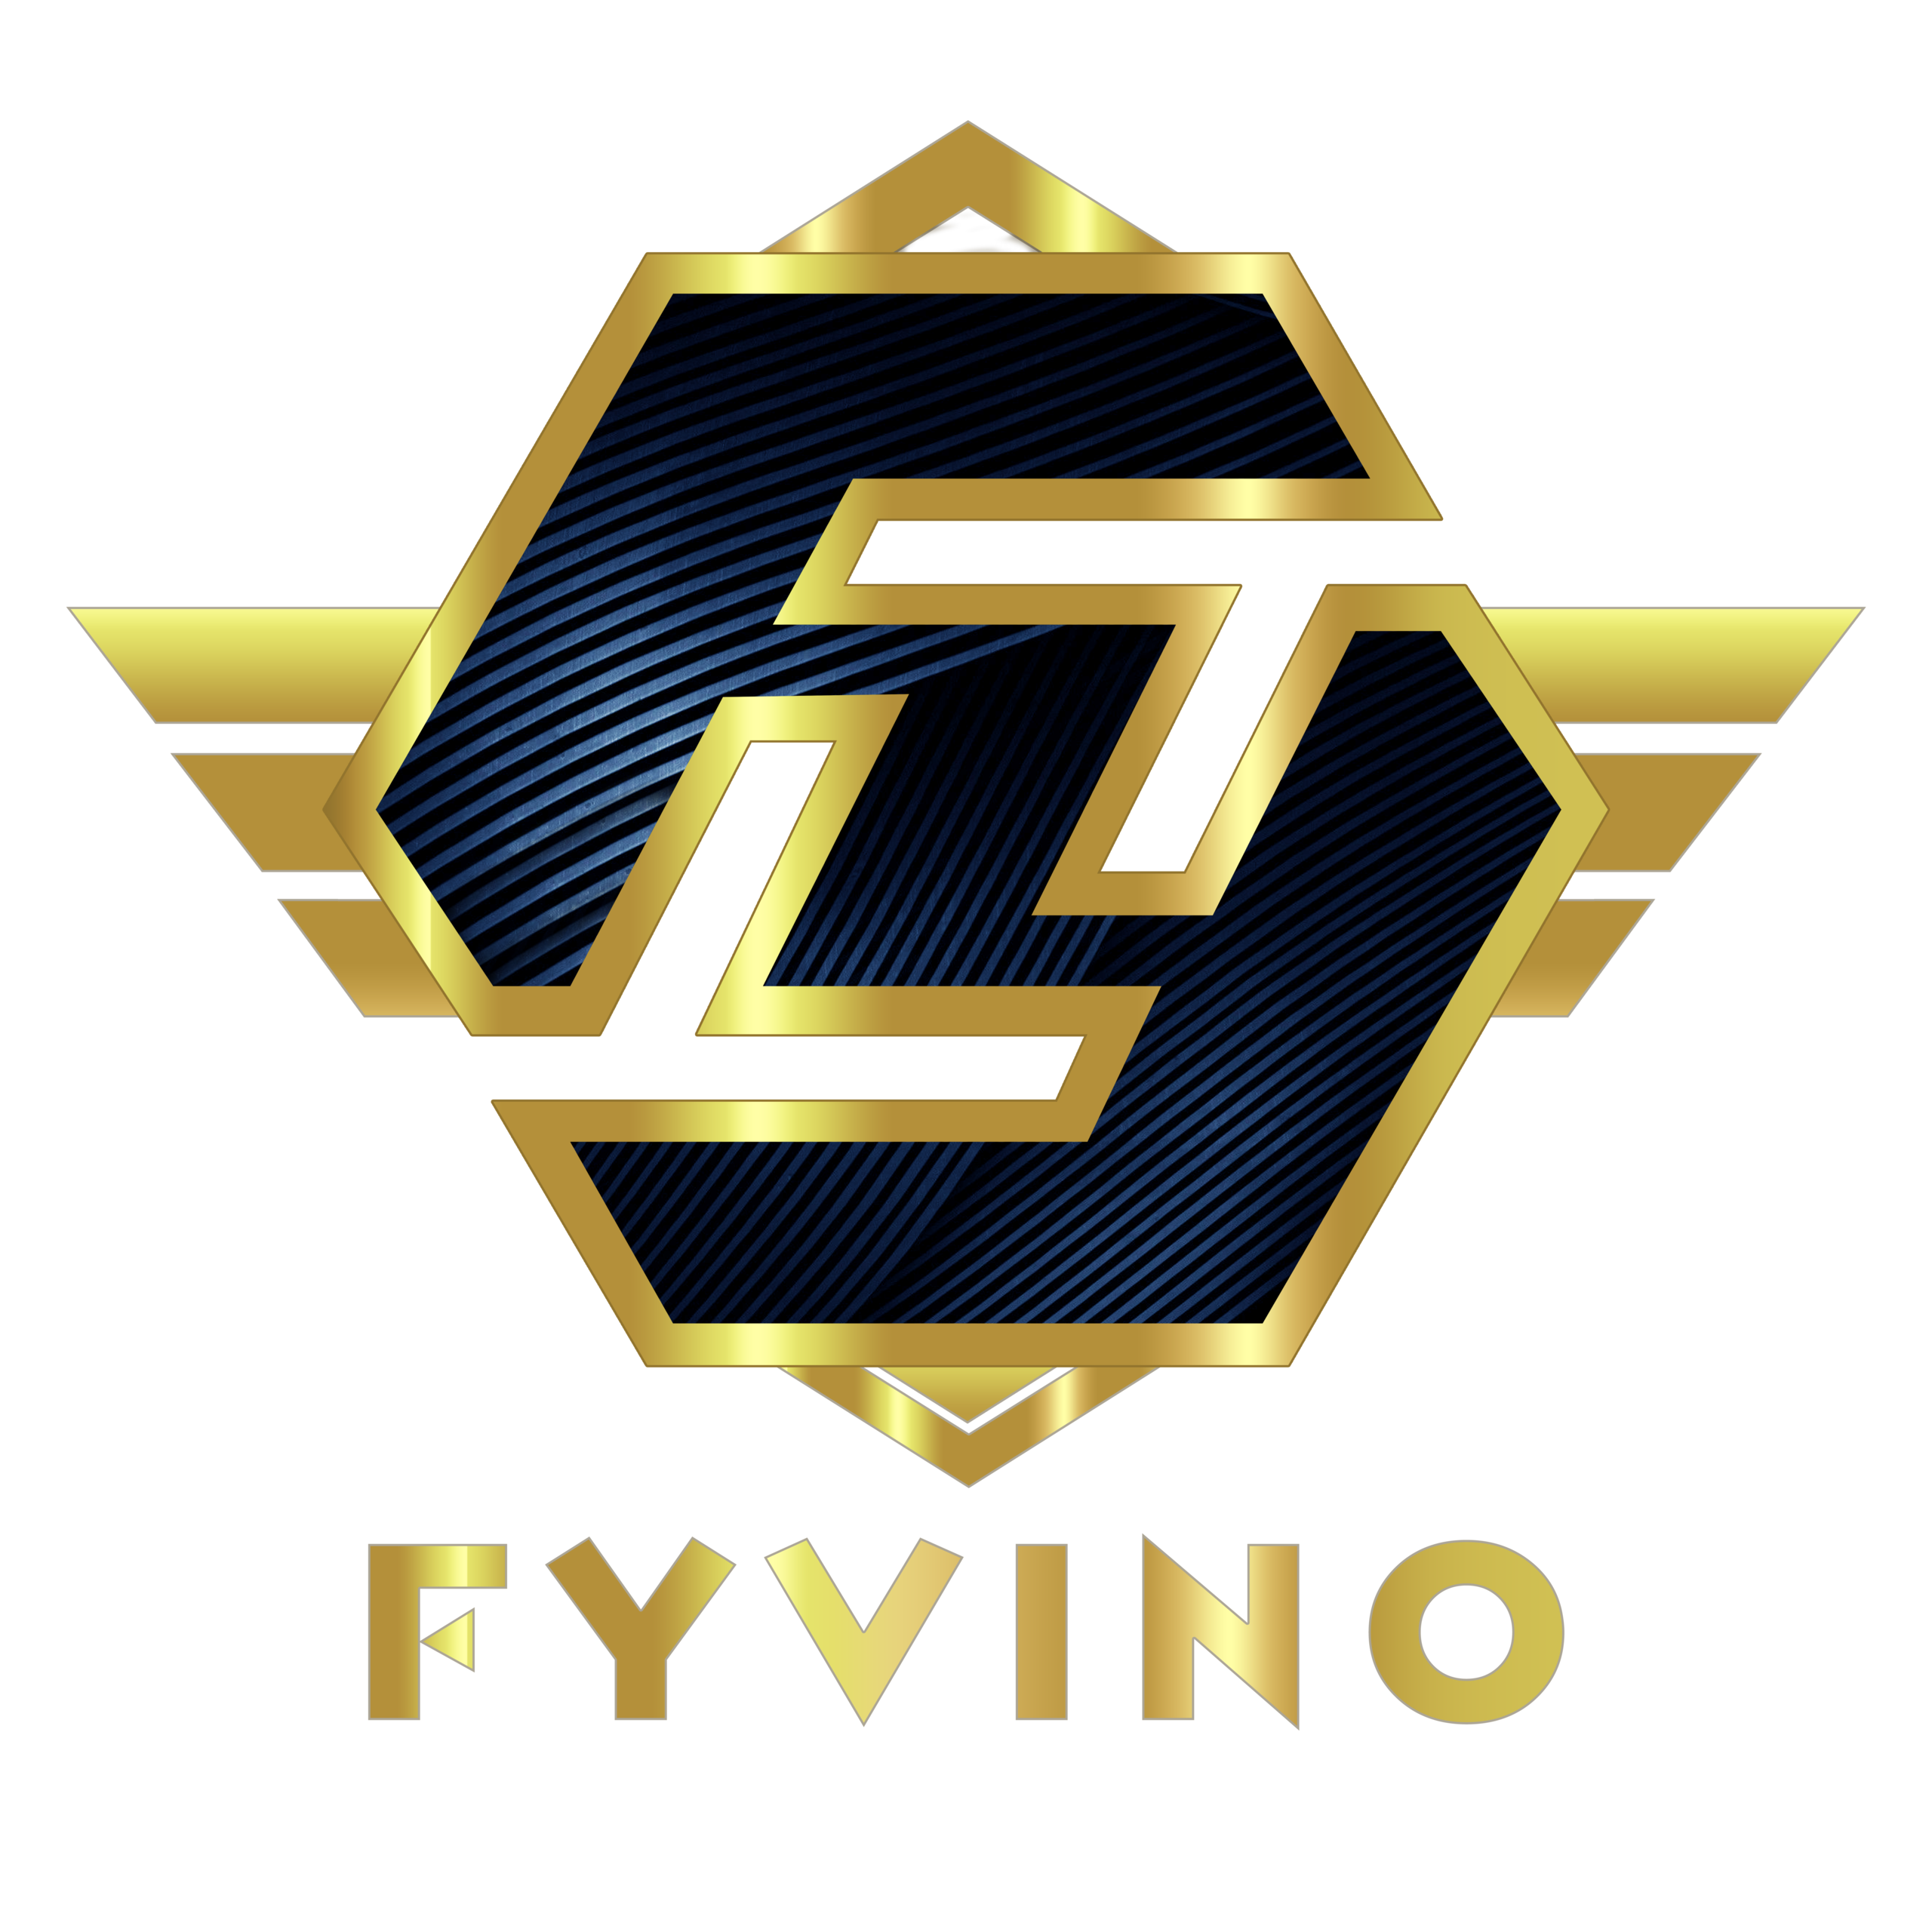 Fyvino